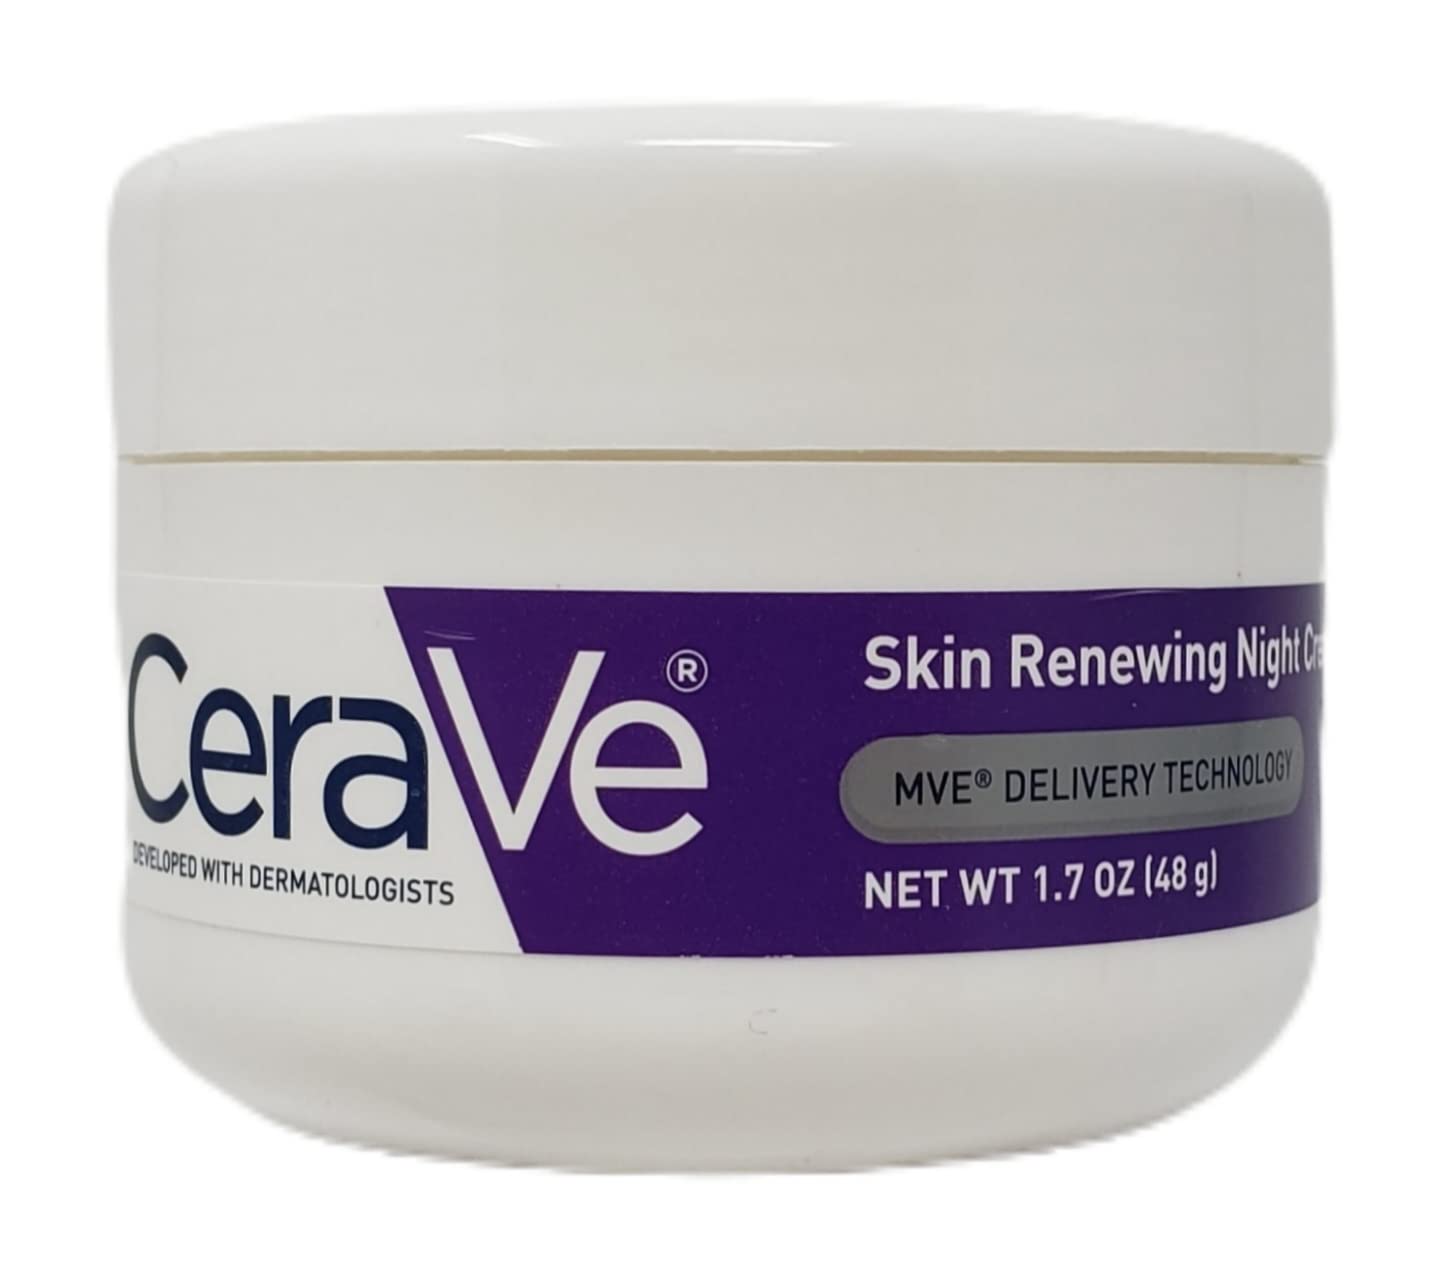 Esupli.com CeraVe Skin Renewing Day and Night Bundle - Contains CeraVe 